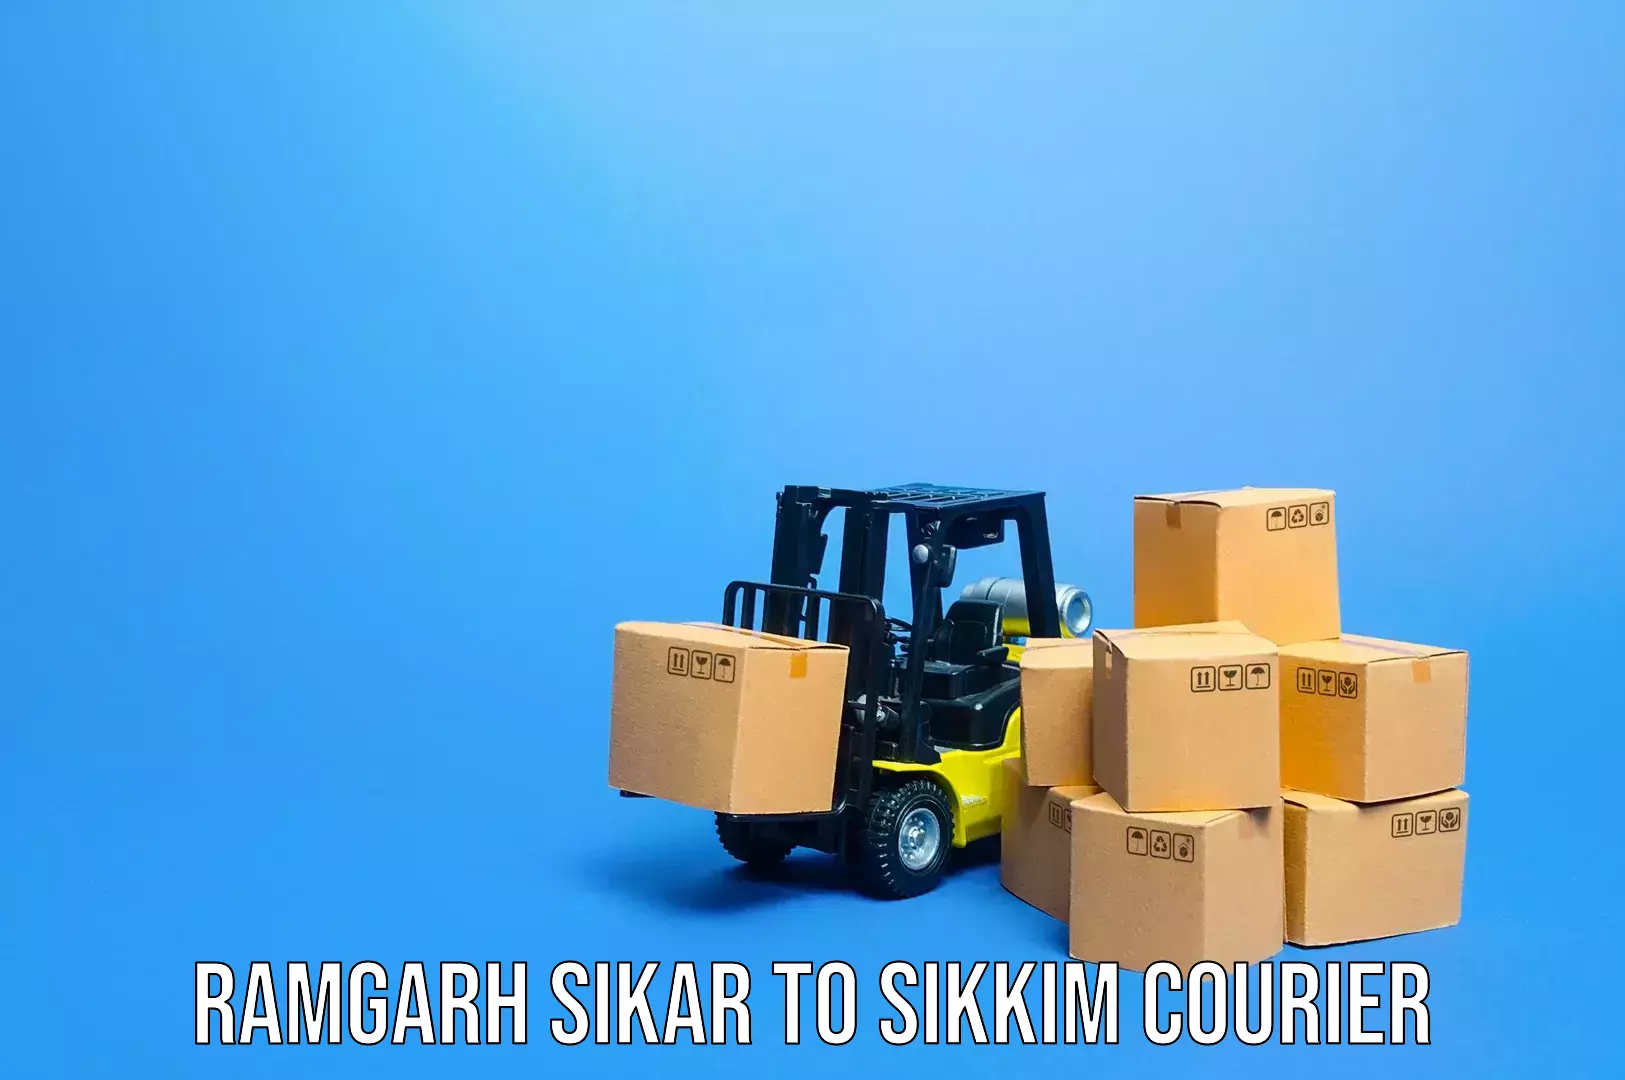 Luggage transport service Ramgarh Sikar to Jorethang